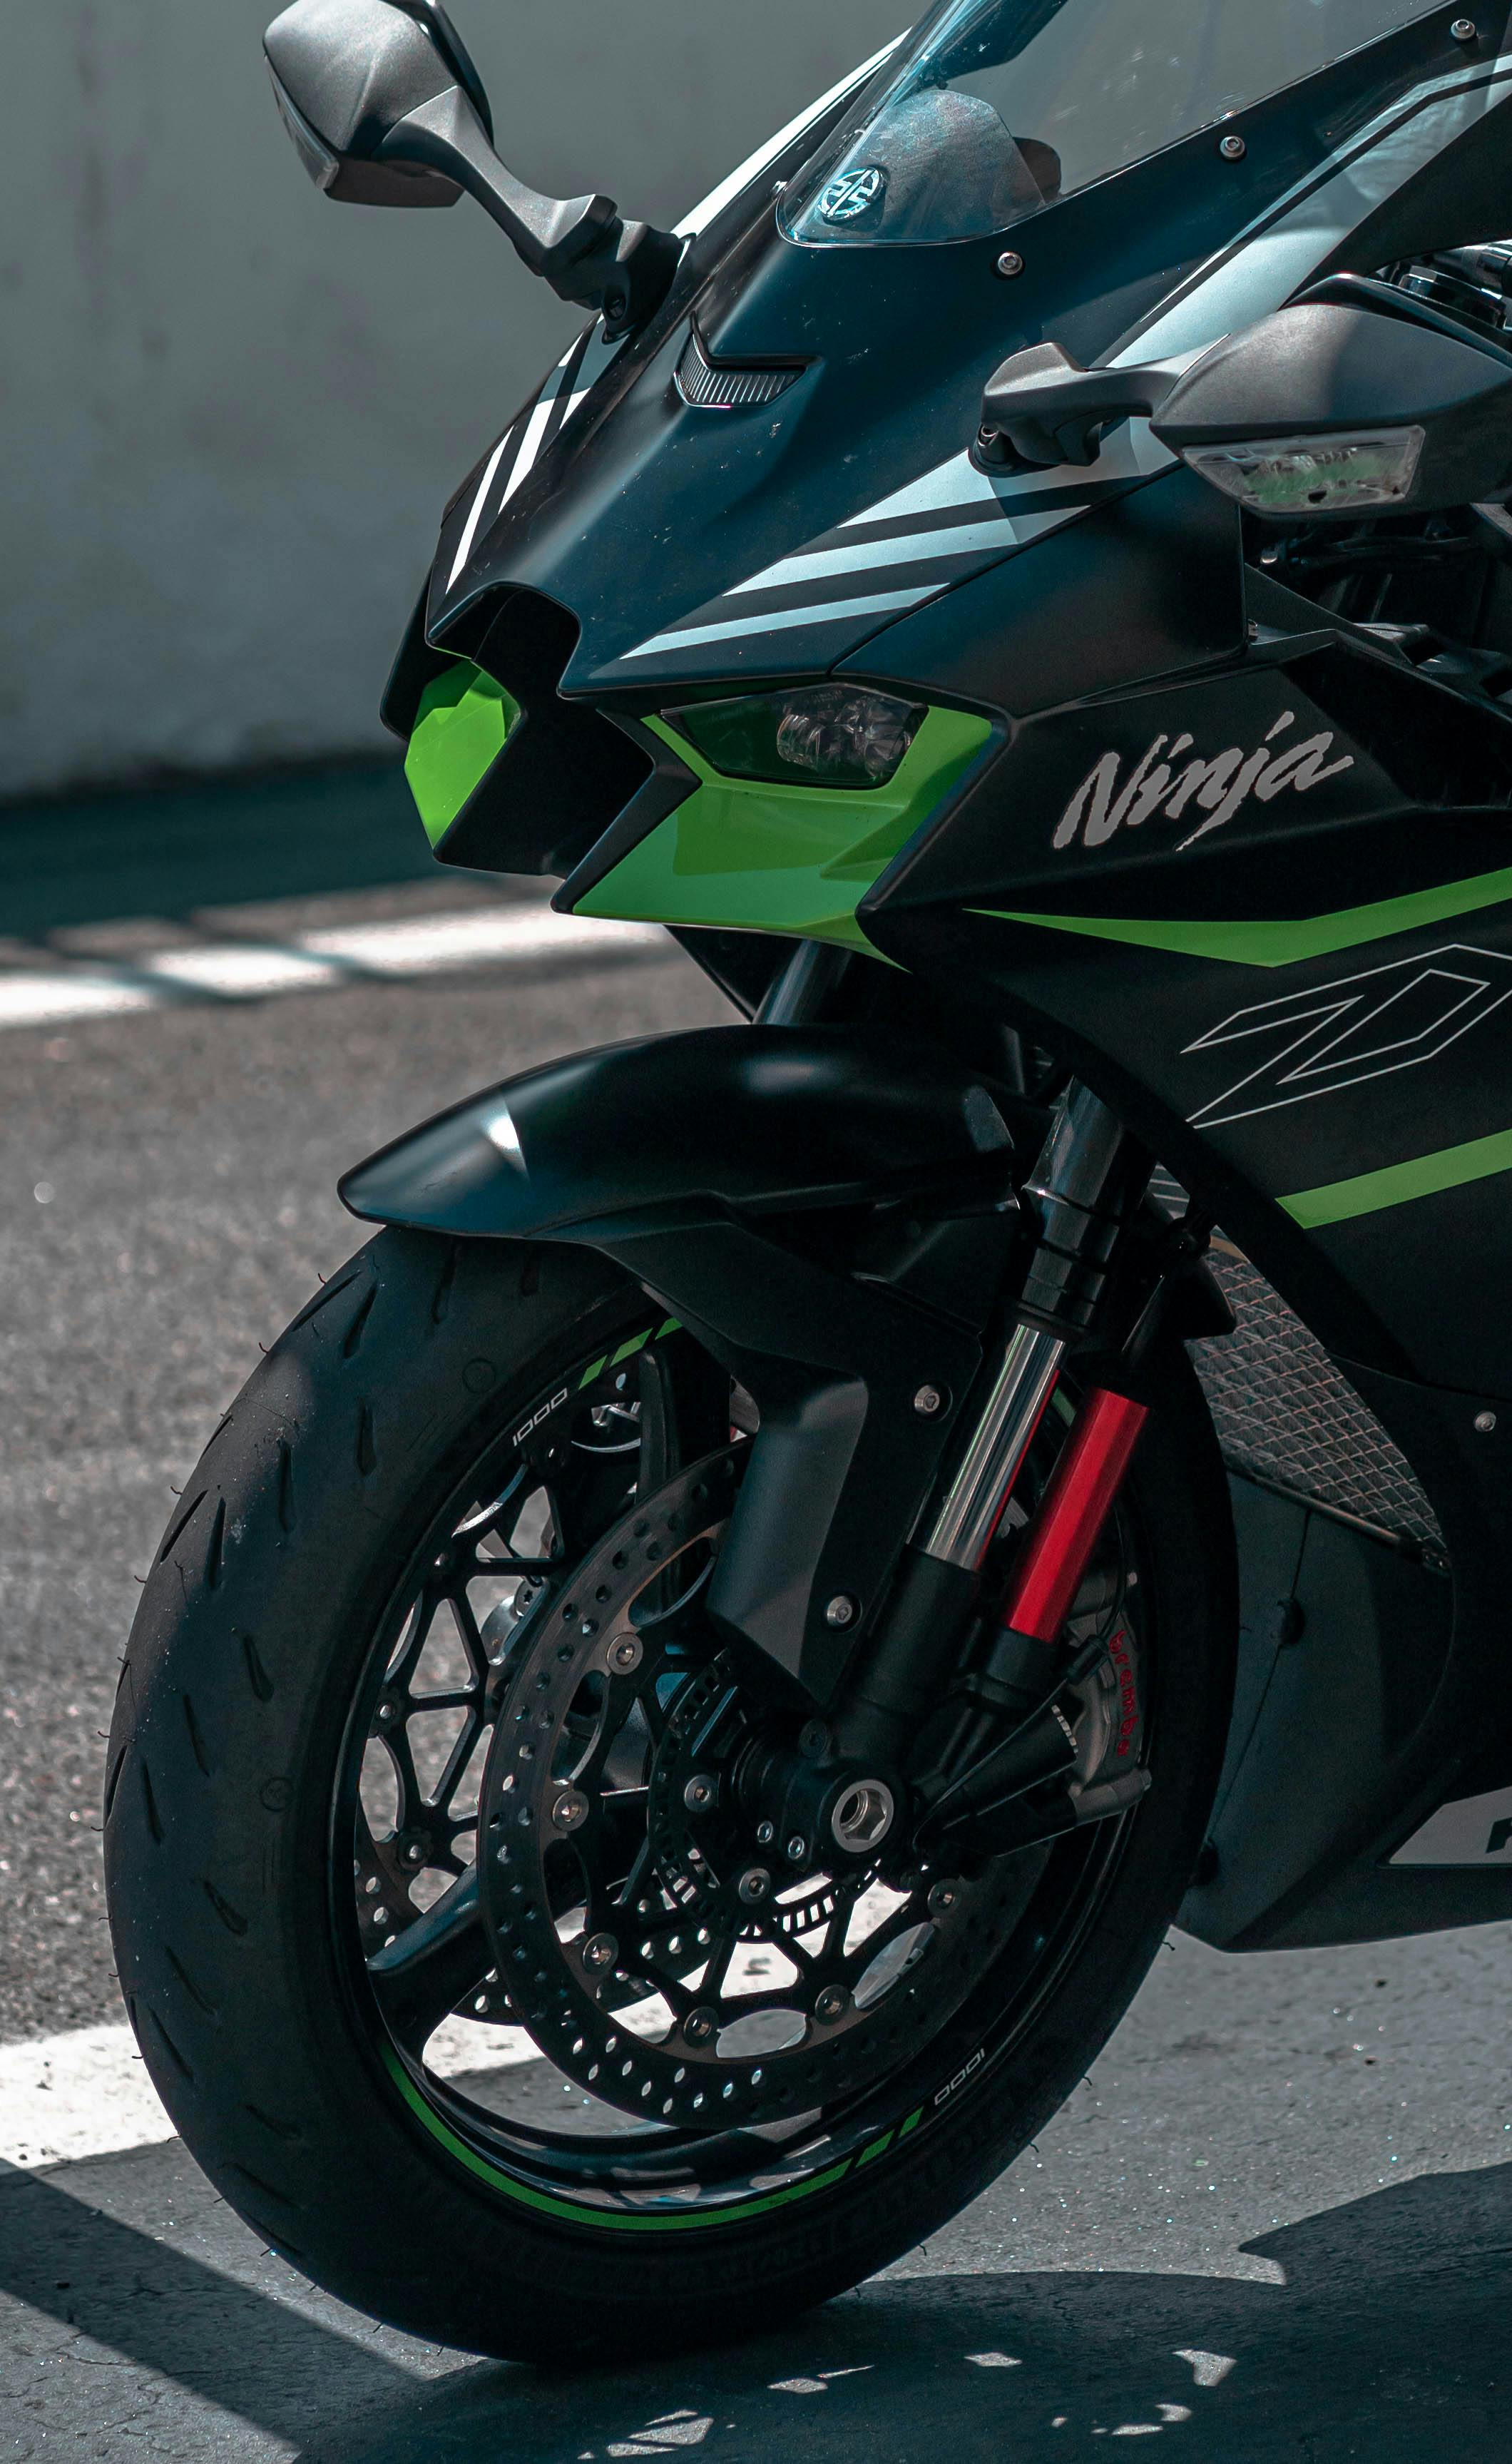 Kawasaki Ninja H2 4k HD Bikes 4k Wallpapers Images Backgrounds Photos  and Pictures